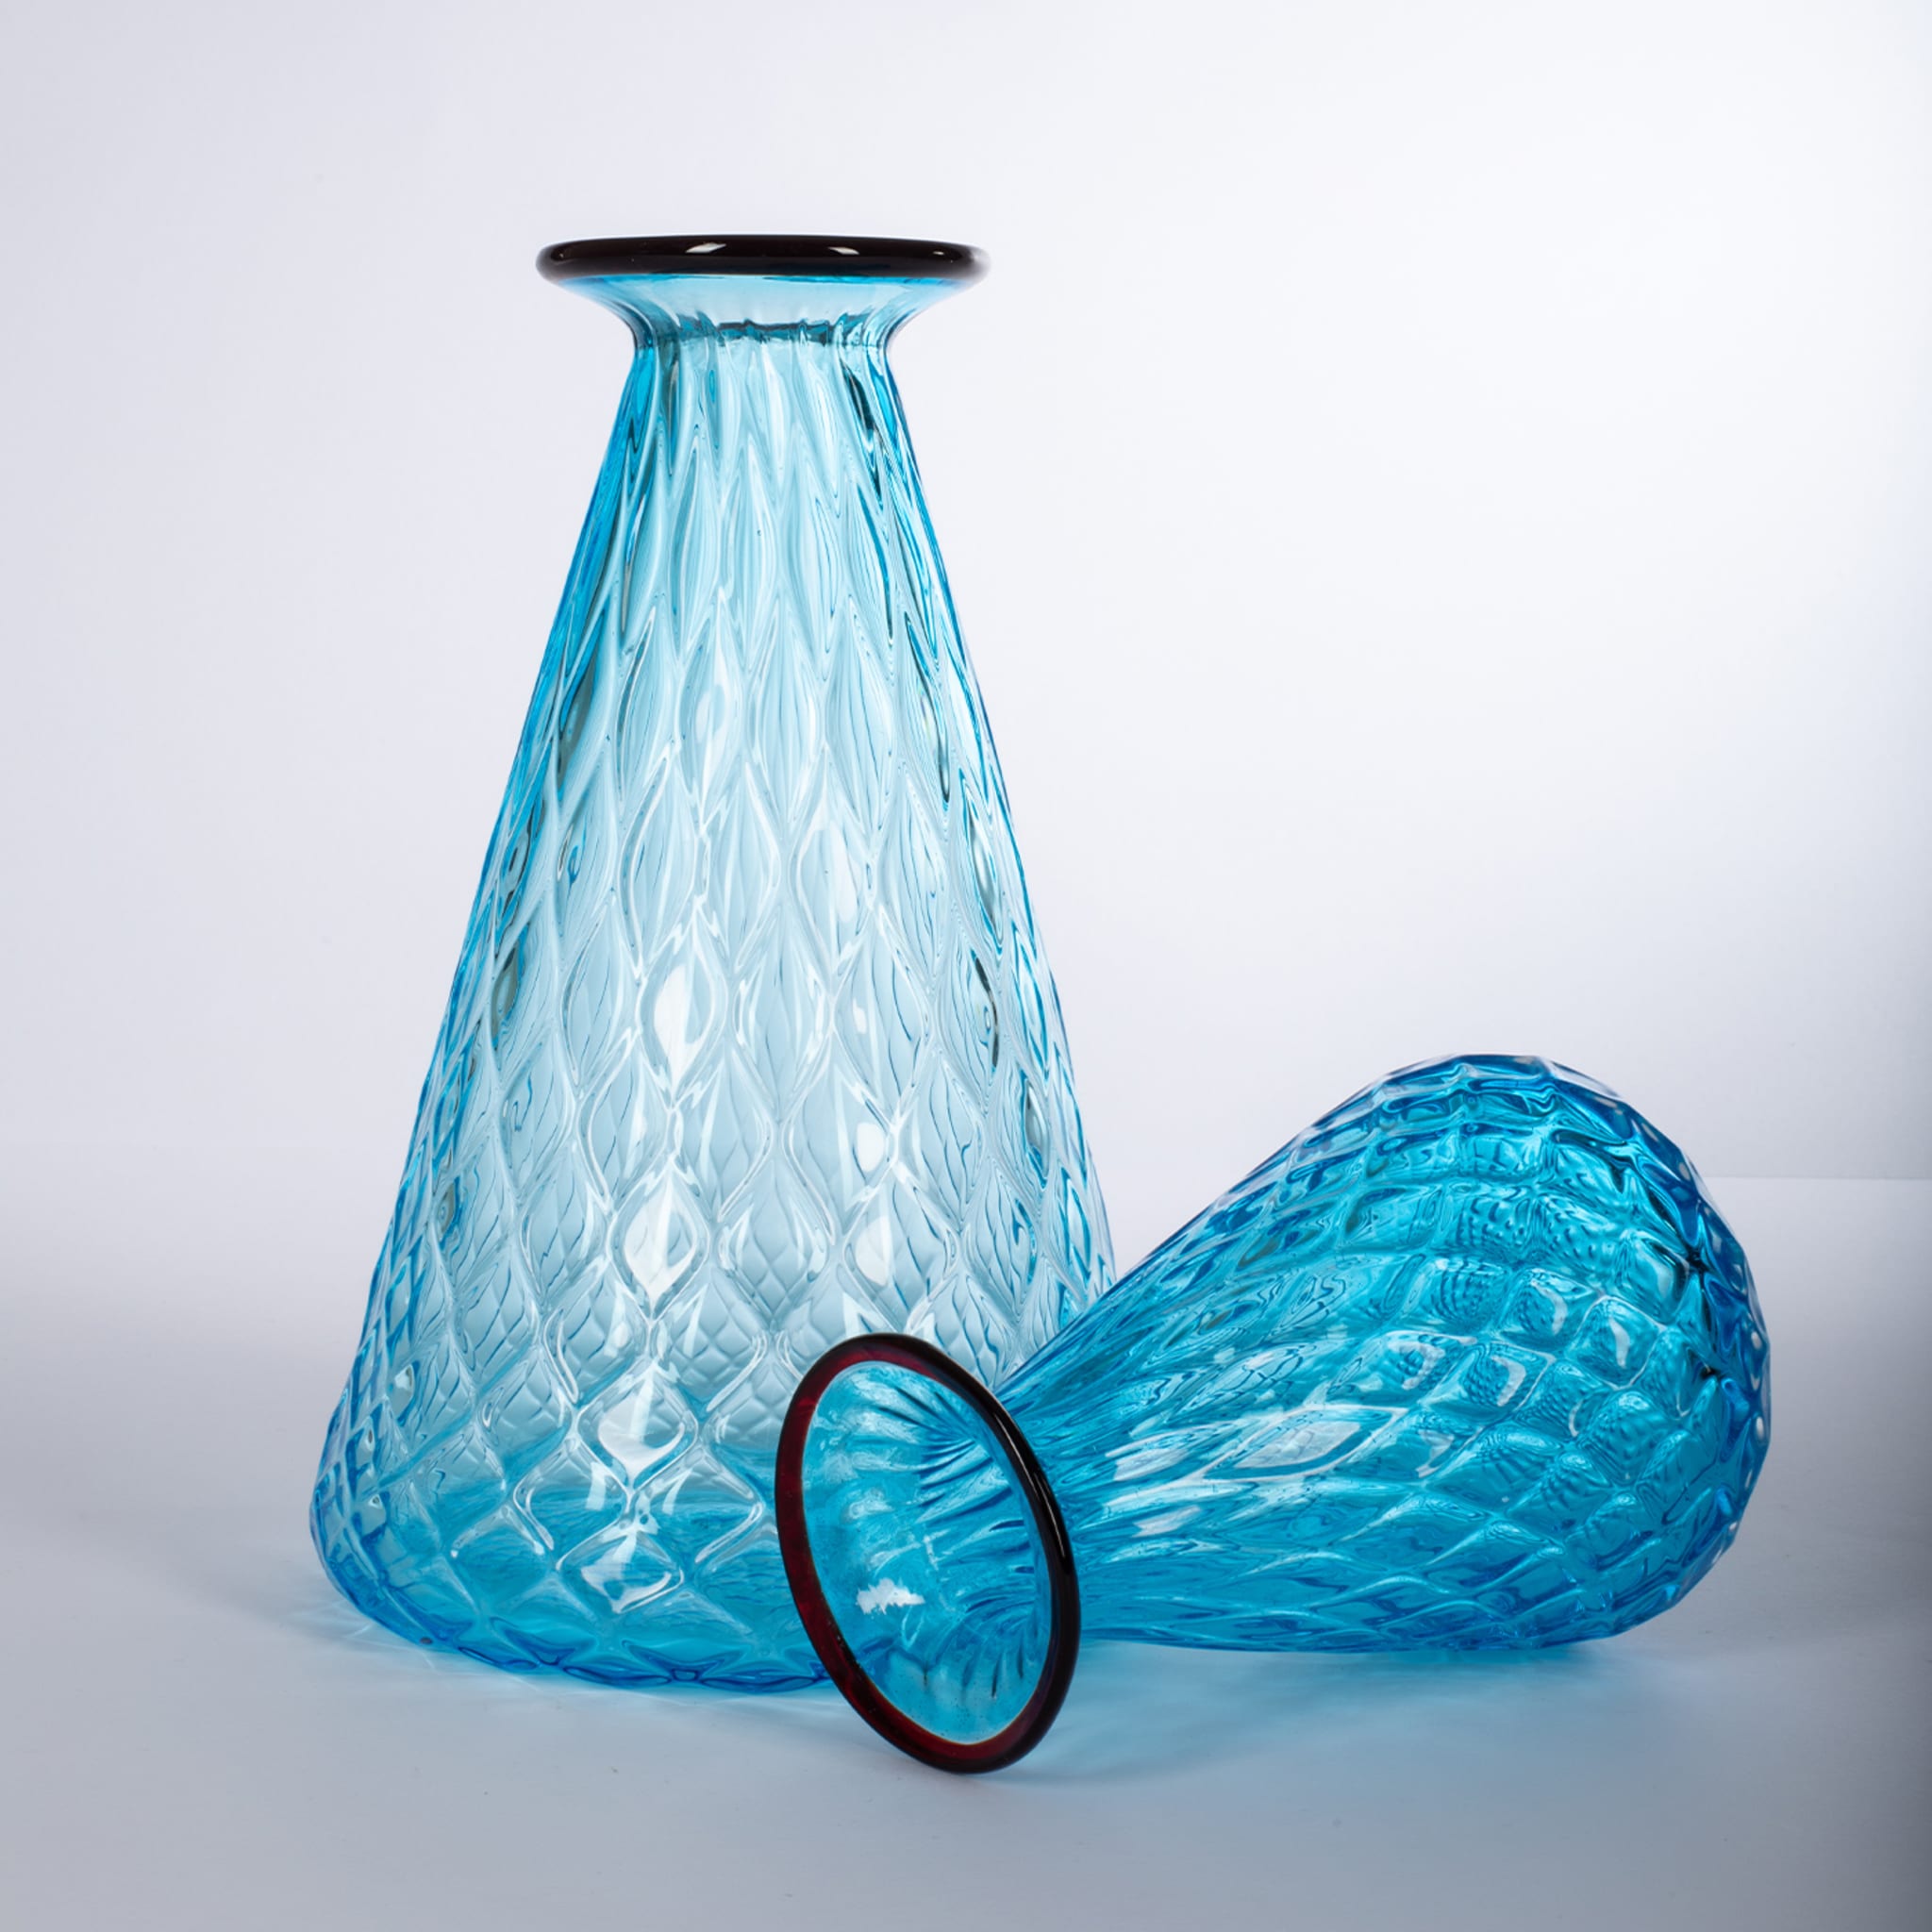 Acqua Mare Balloton Set of 2 Conical Azure Vases - Alternative view 2